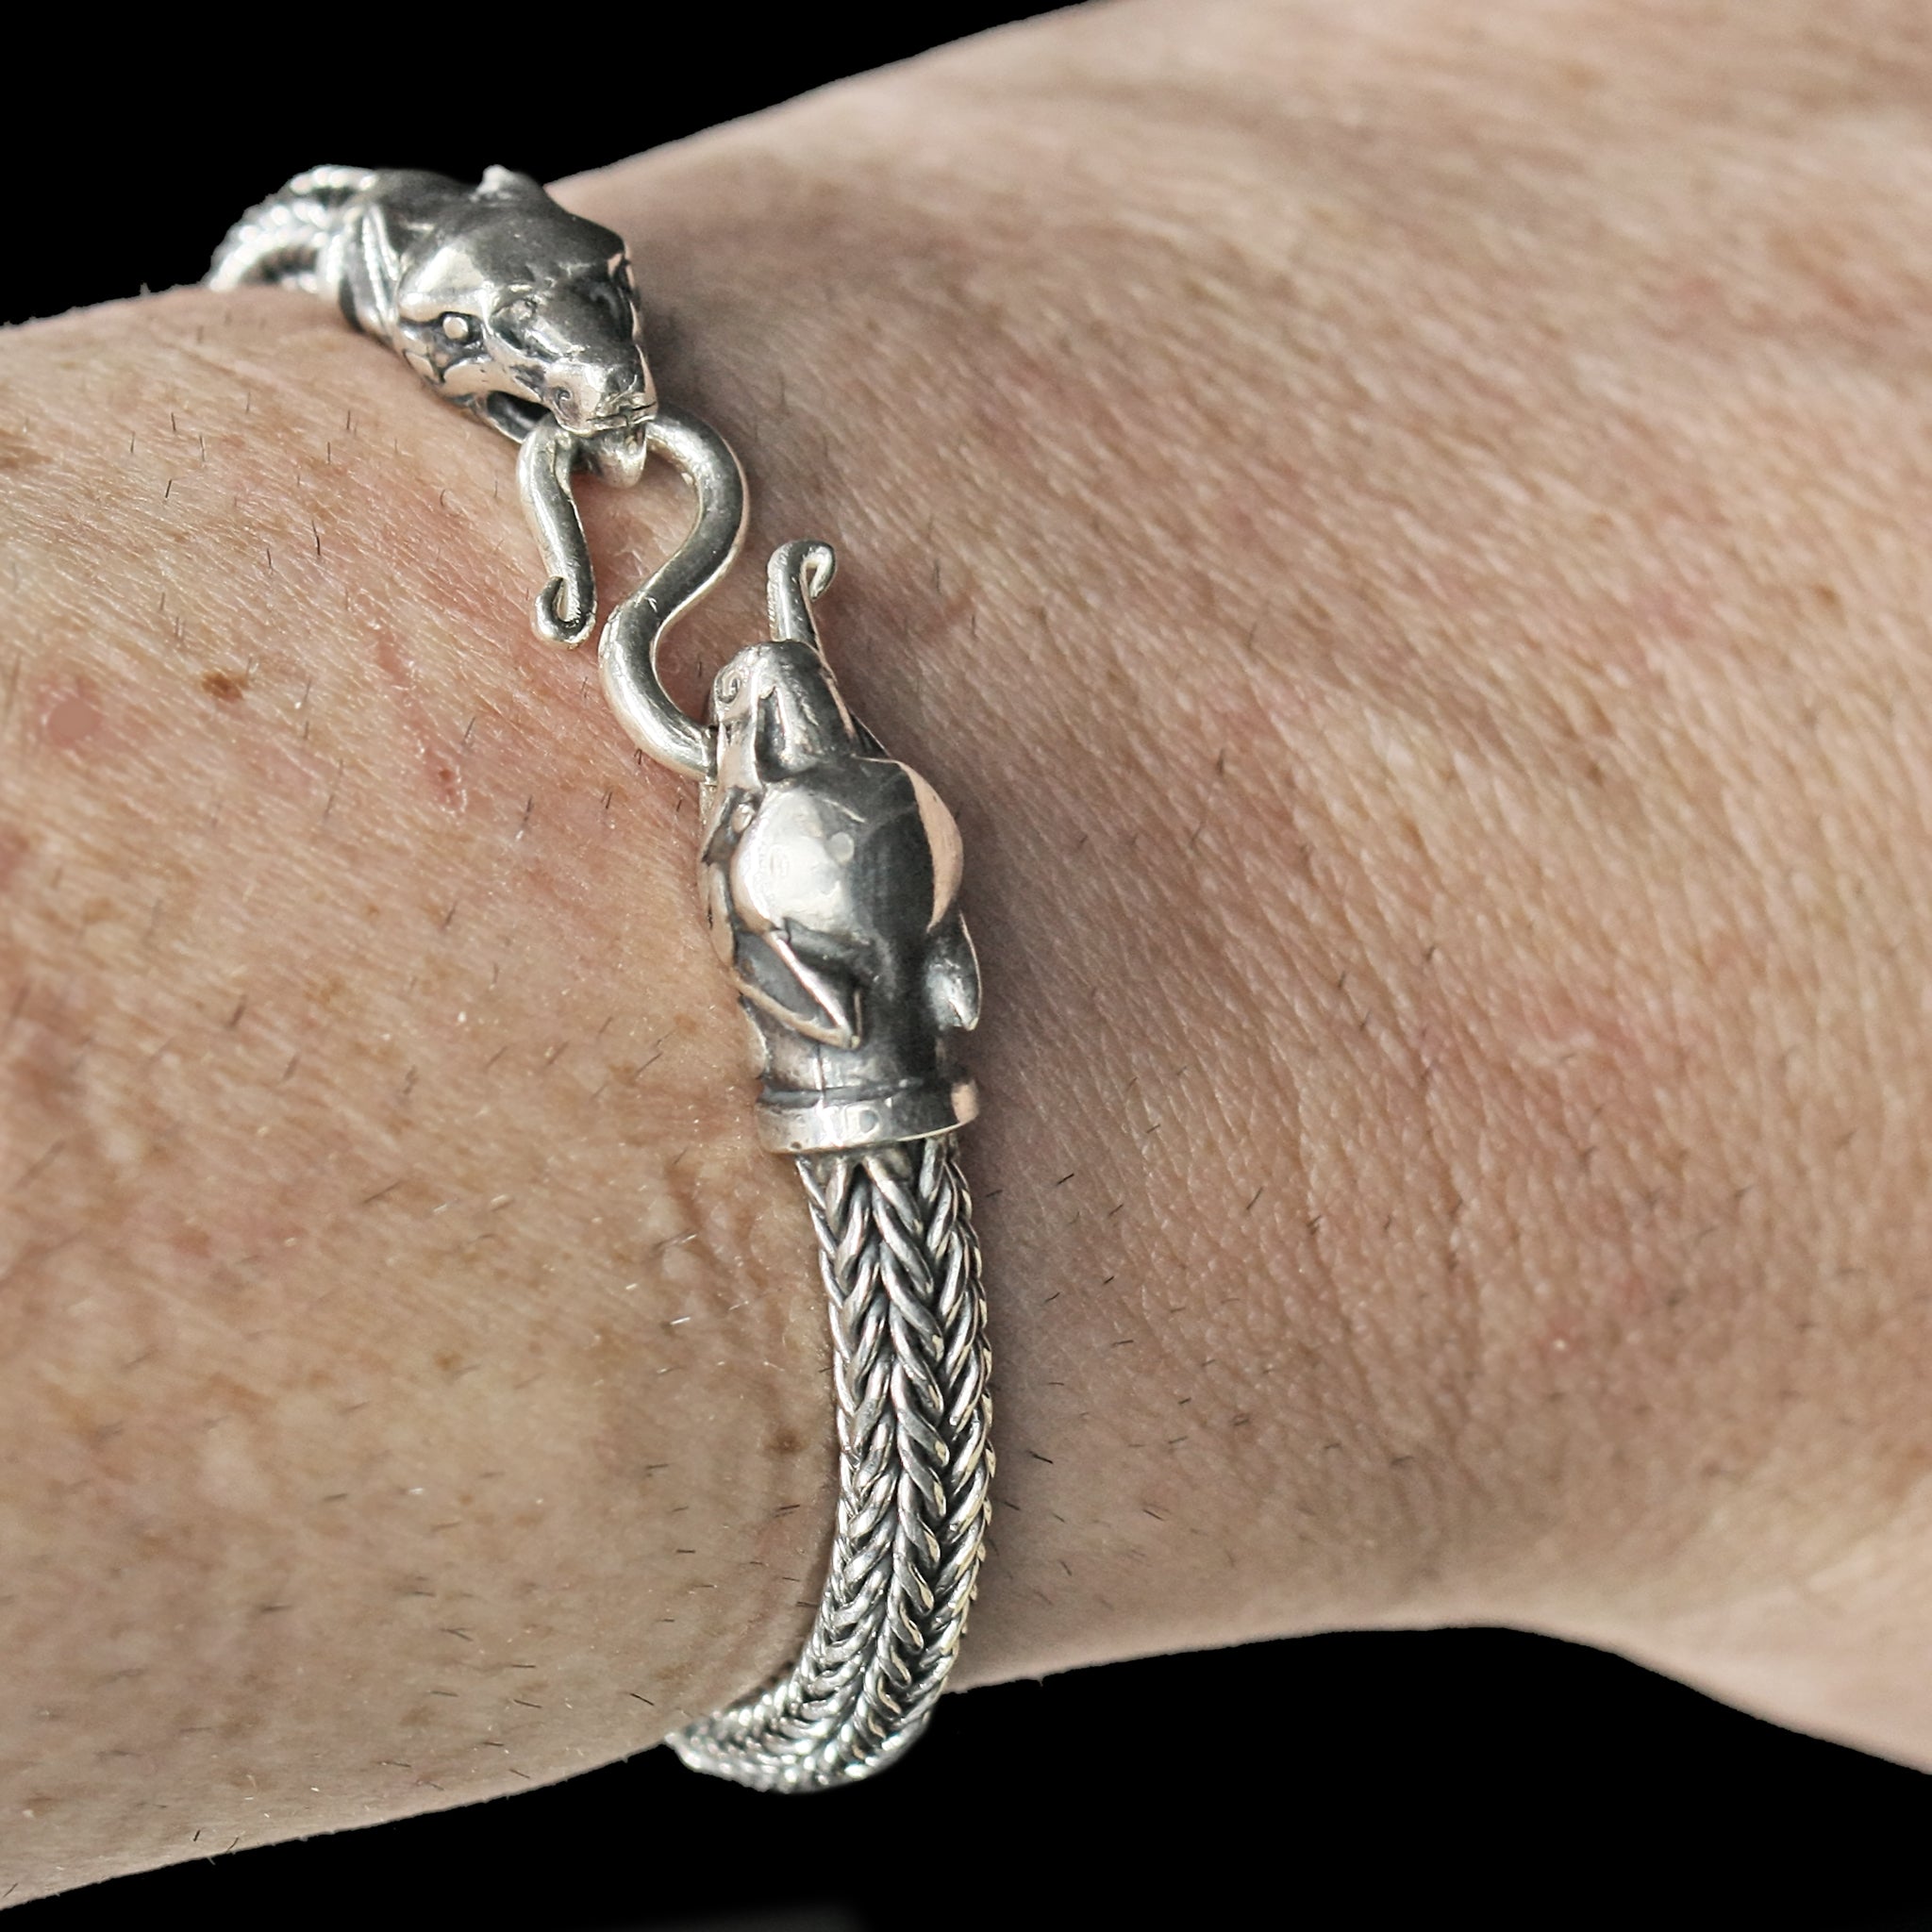 5mm Silver Snake Bracelet With Ferocious Wolf Heads On Wrist